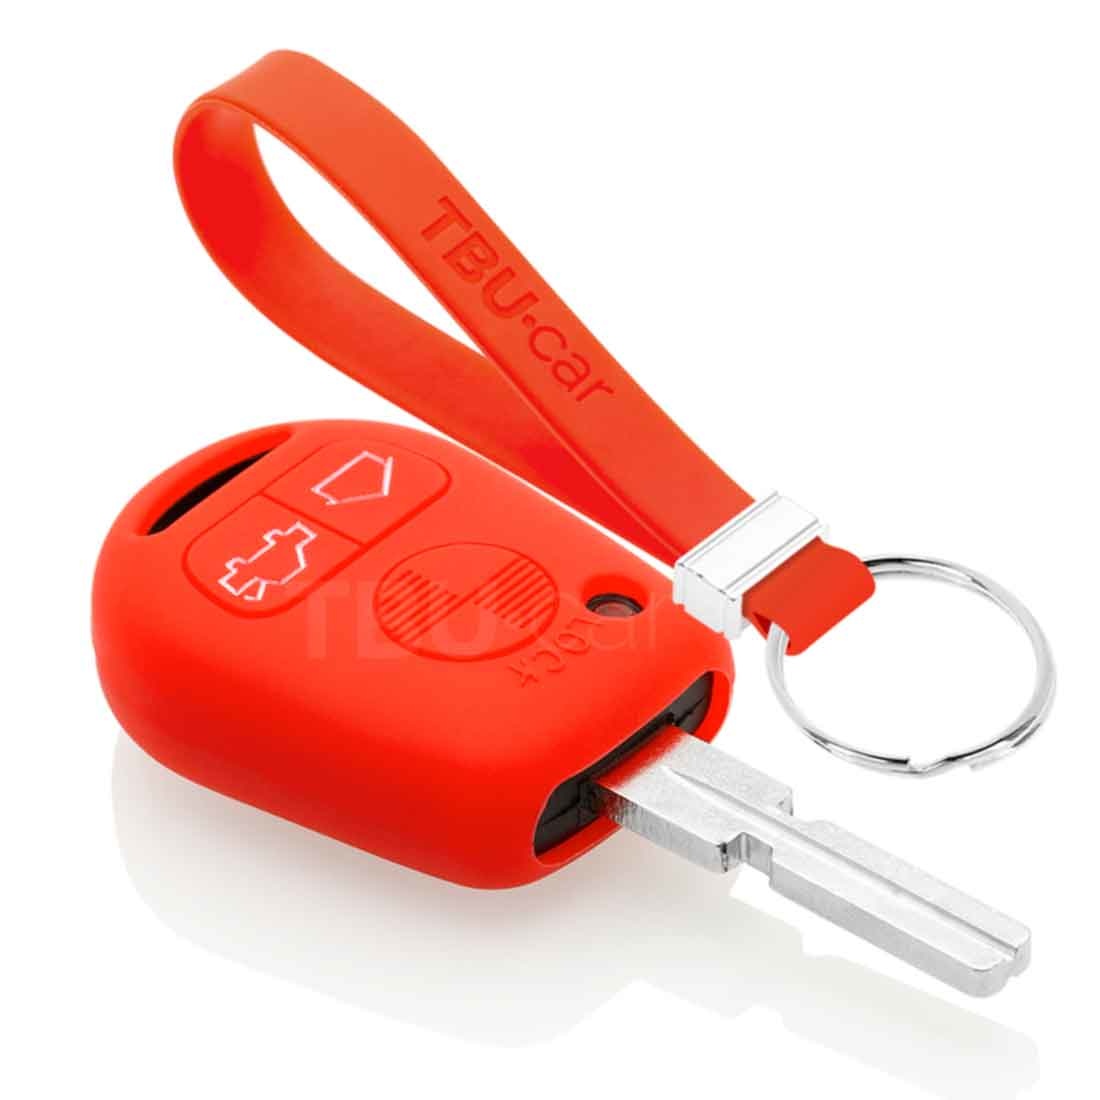 TBU car TBU car Autoschlüssel Hülle kompatibel mit BMW 3 Tasten - Schutzhülle aus Silikon - Auto Schlüsselhülle Cover in Rot